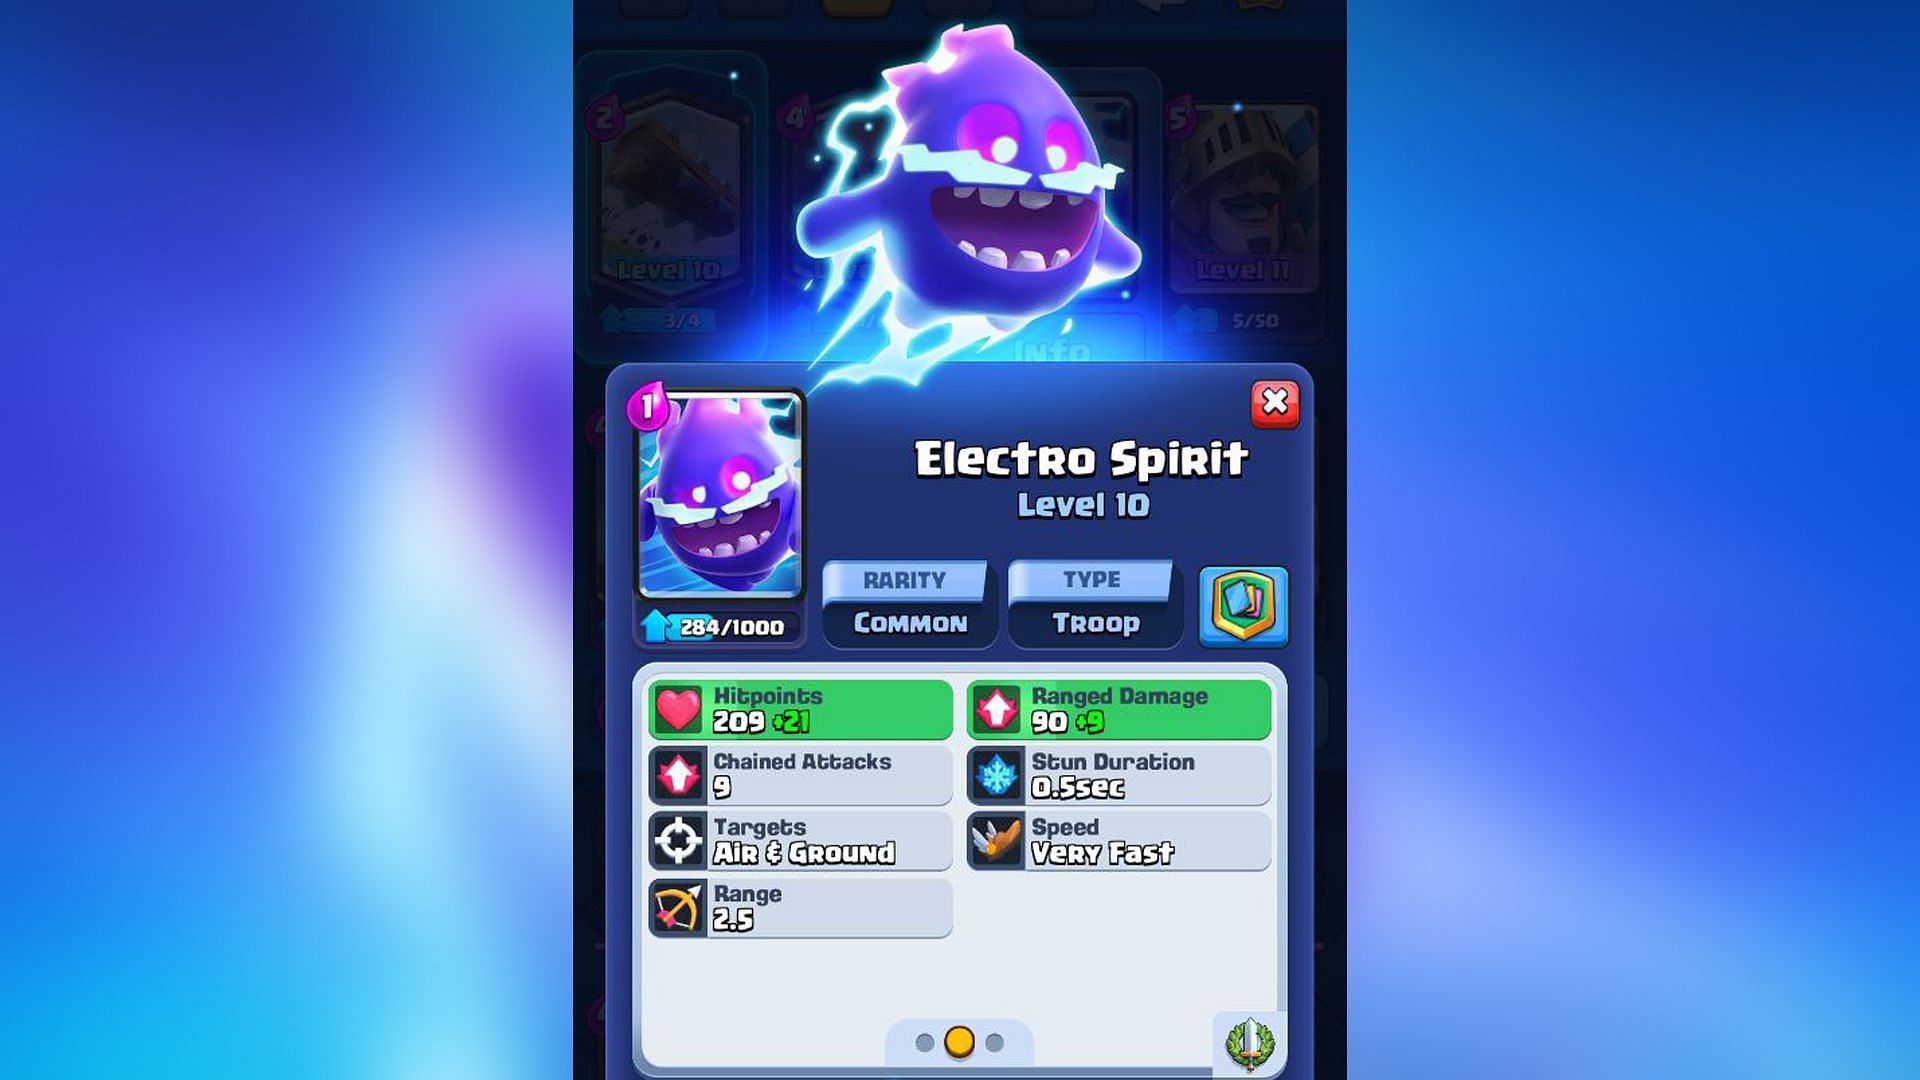 Electro Spirit stats (Image via Supercell)